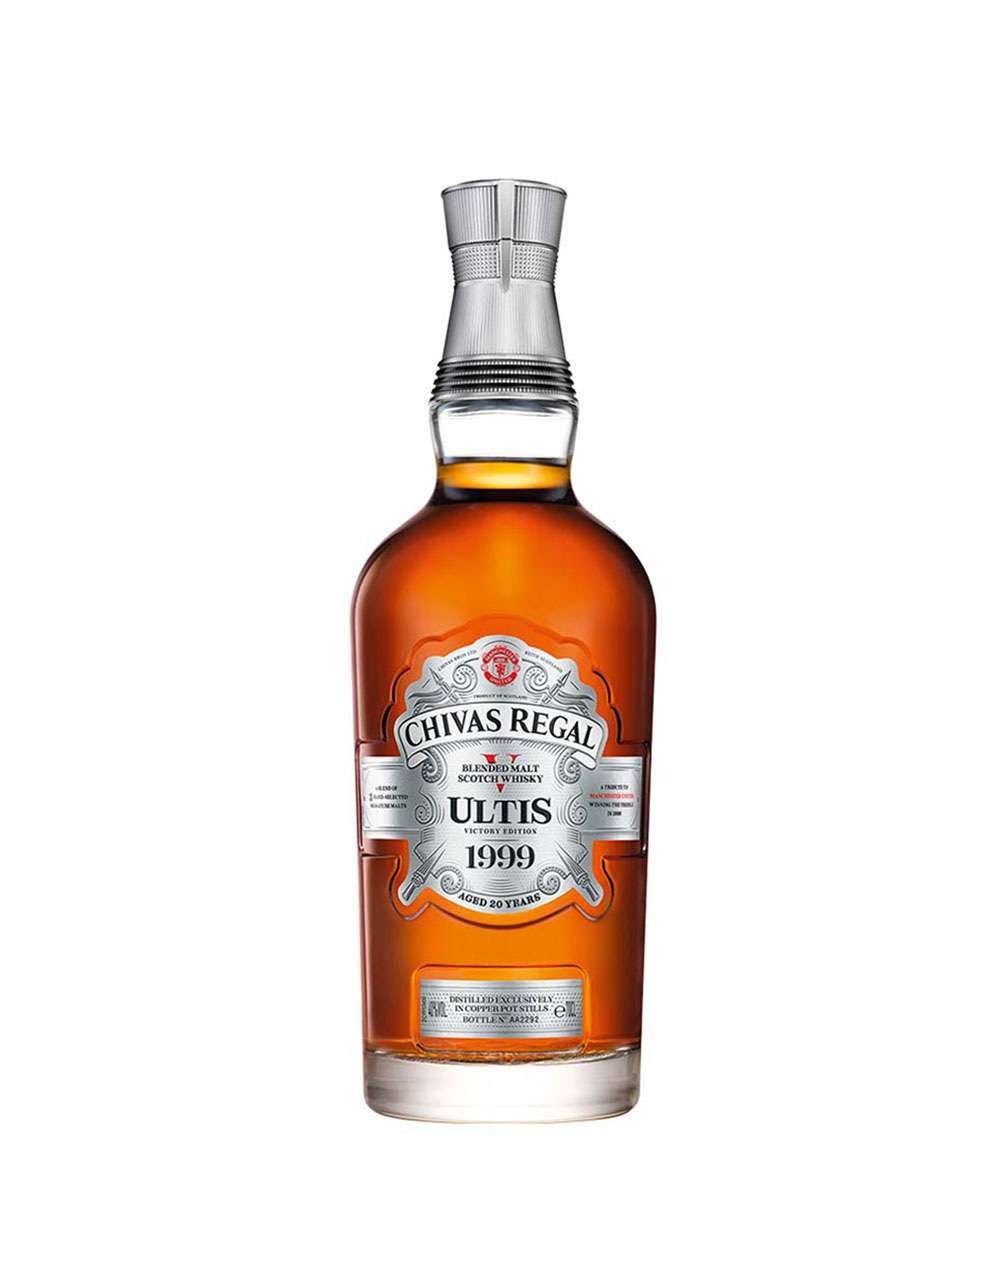 Chivas Regal Ultis 1999 20 Year Scotch Whisky